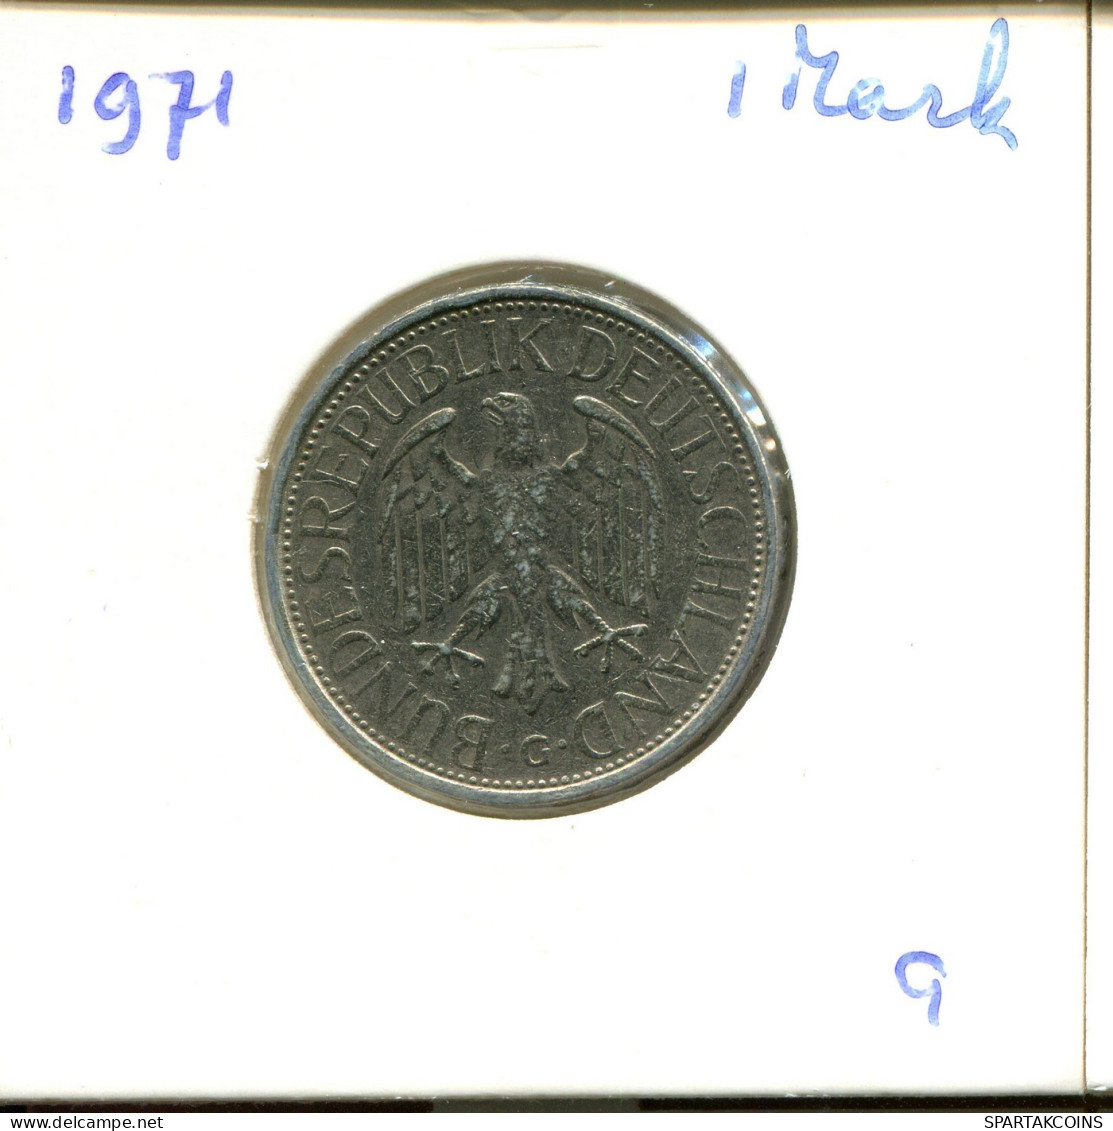 1 DM 1971 П WEST & UNIFIED GERMANY Coin #DA843.U.A - 1 Marco